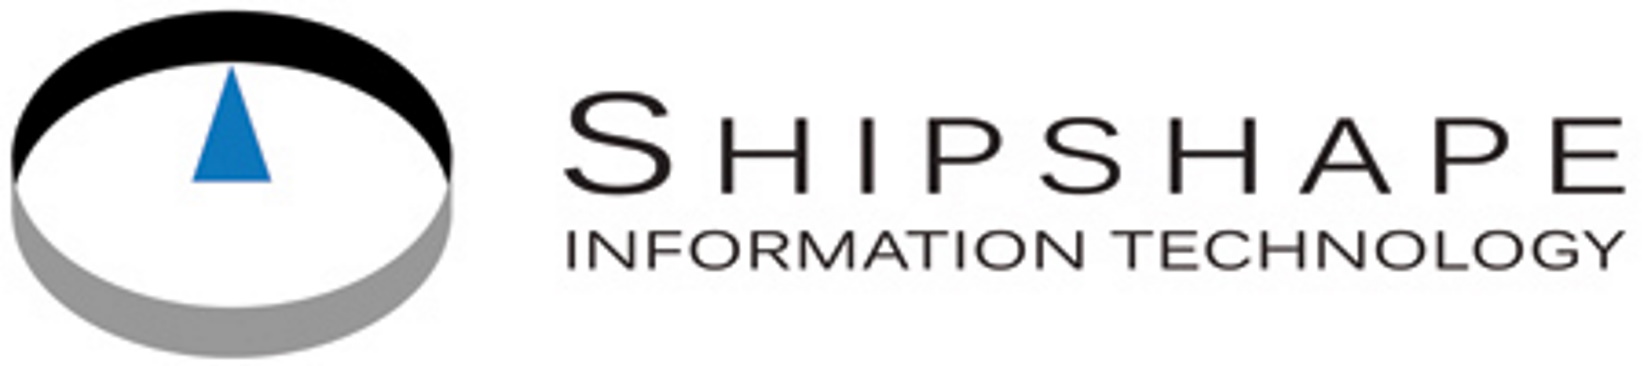 Shipshape IT - Washington DC IT Support Location's Logo